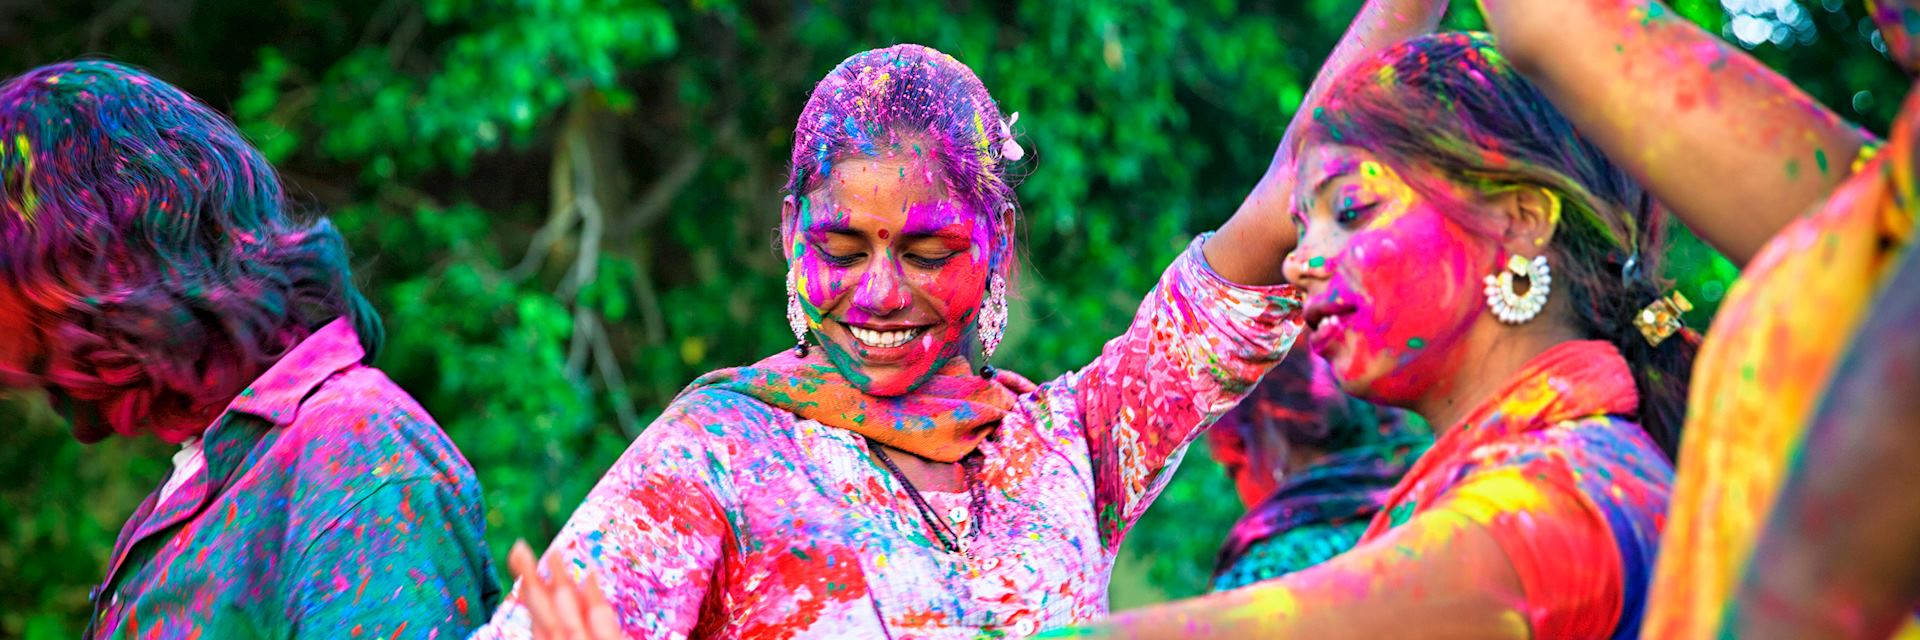 Celebrating Holi in Rajasthan